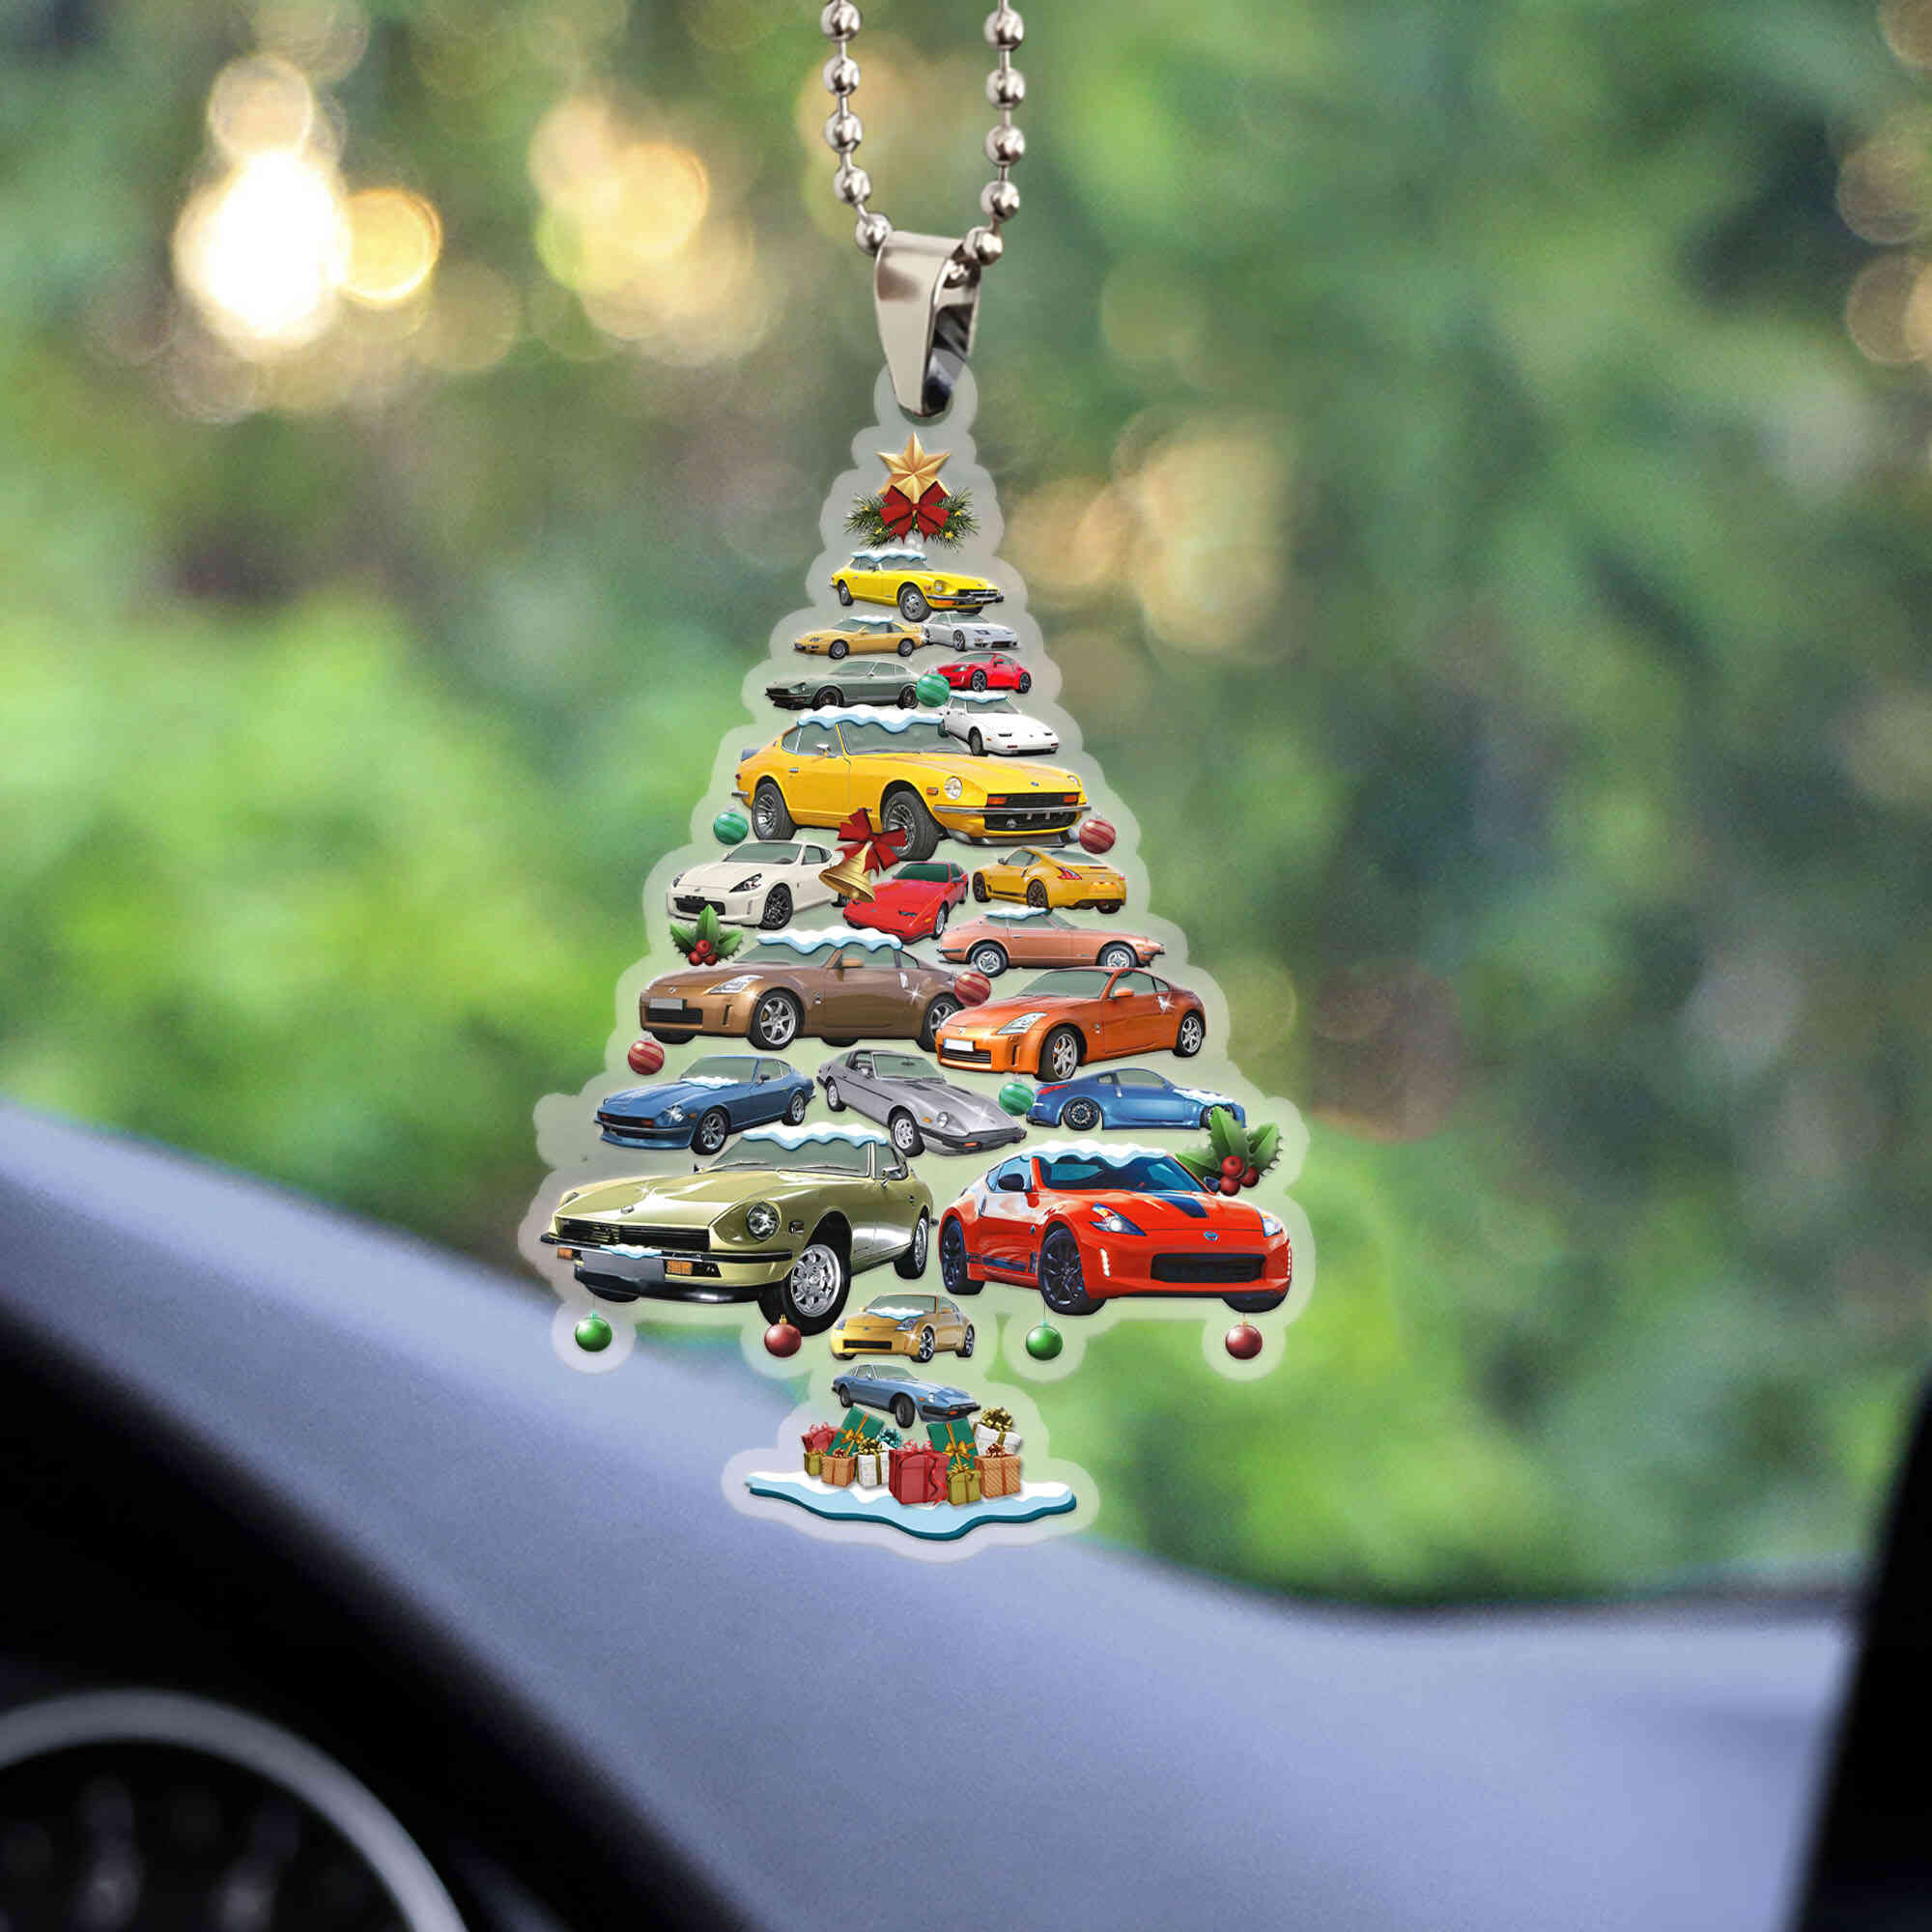 Godzilla All Versions In-car Christmas Hanging Ornament - TrendySweety